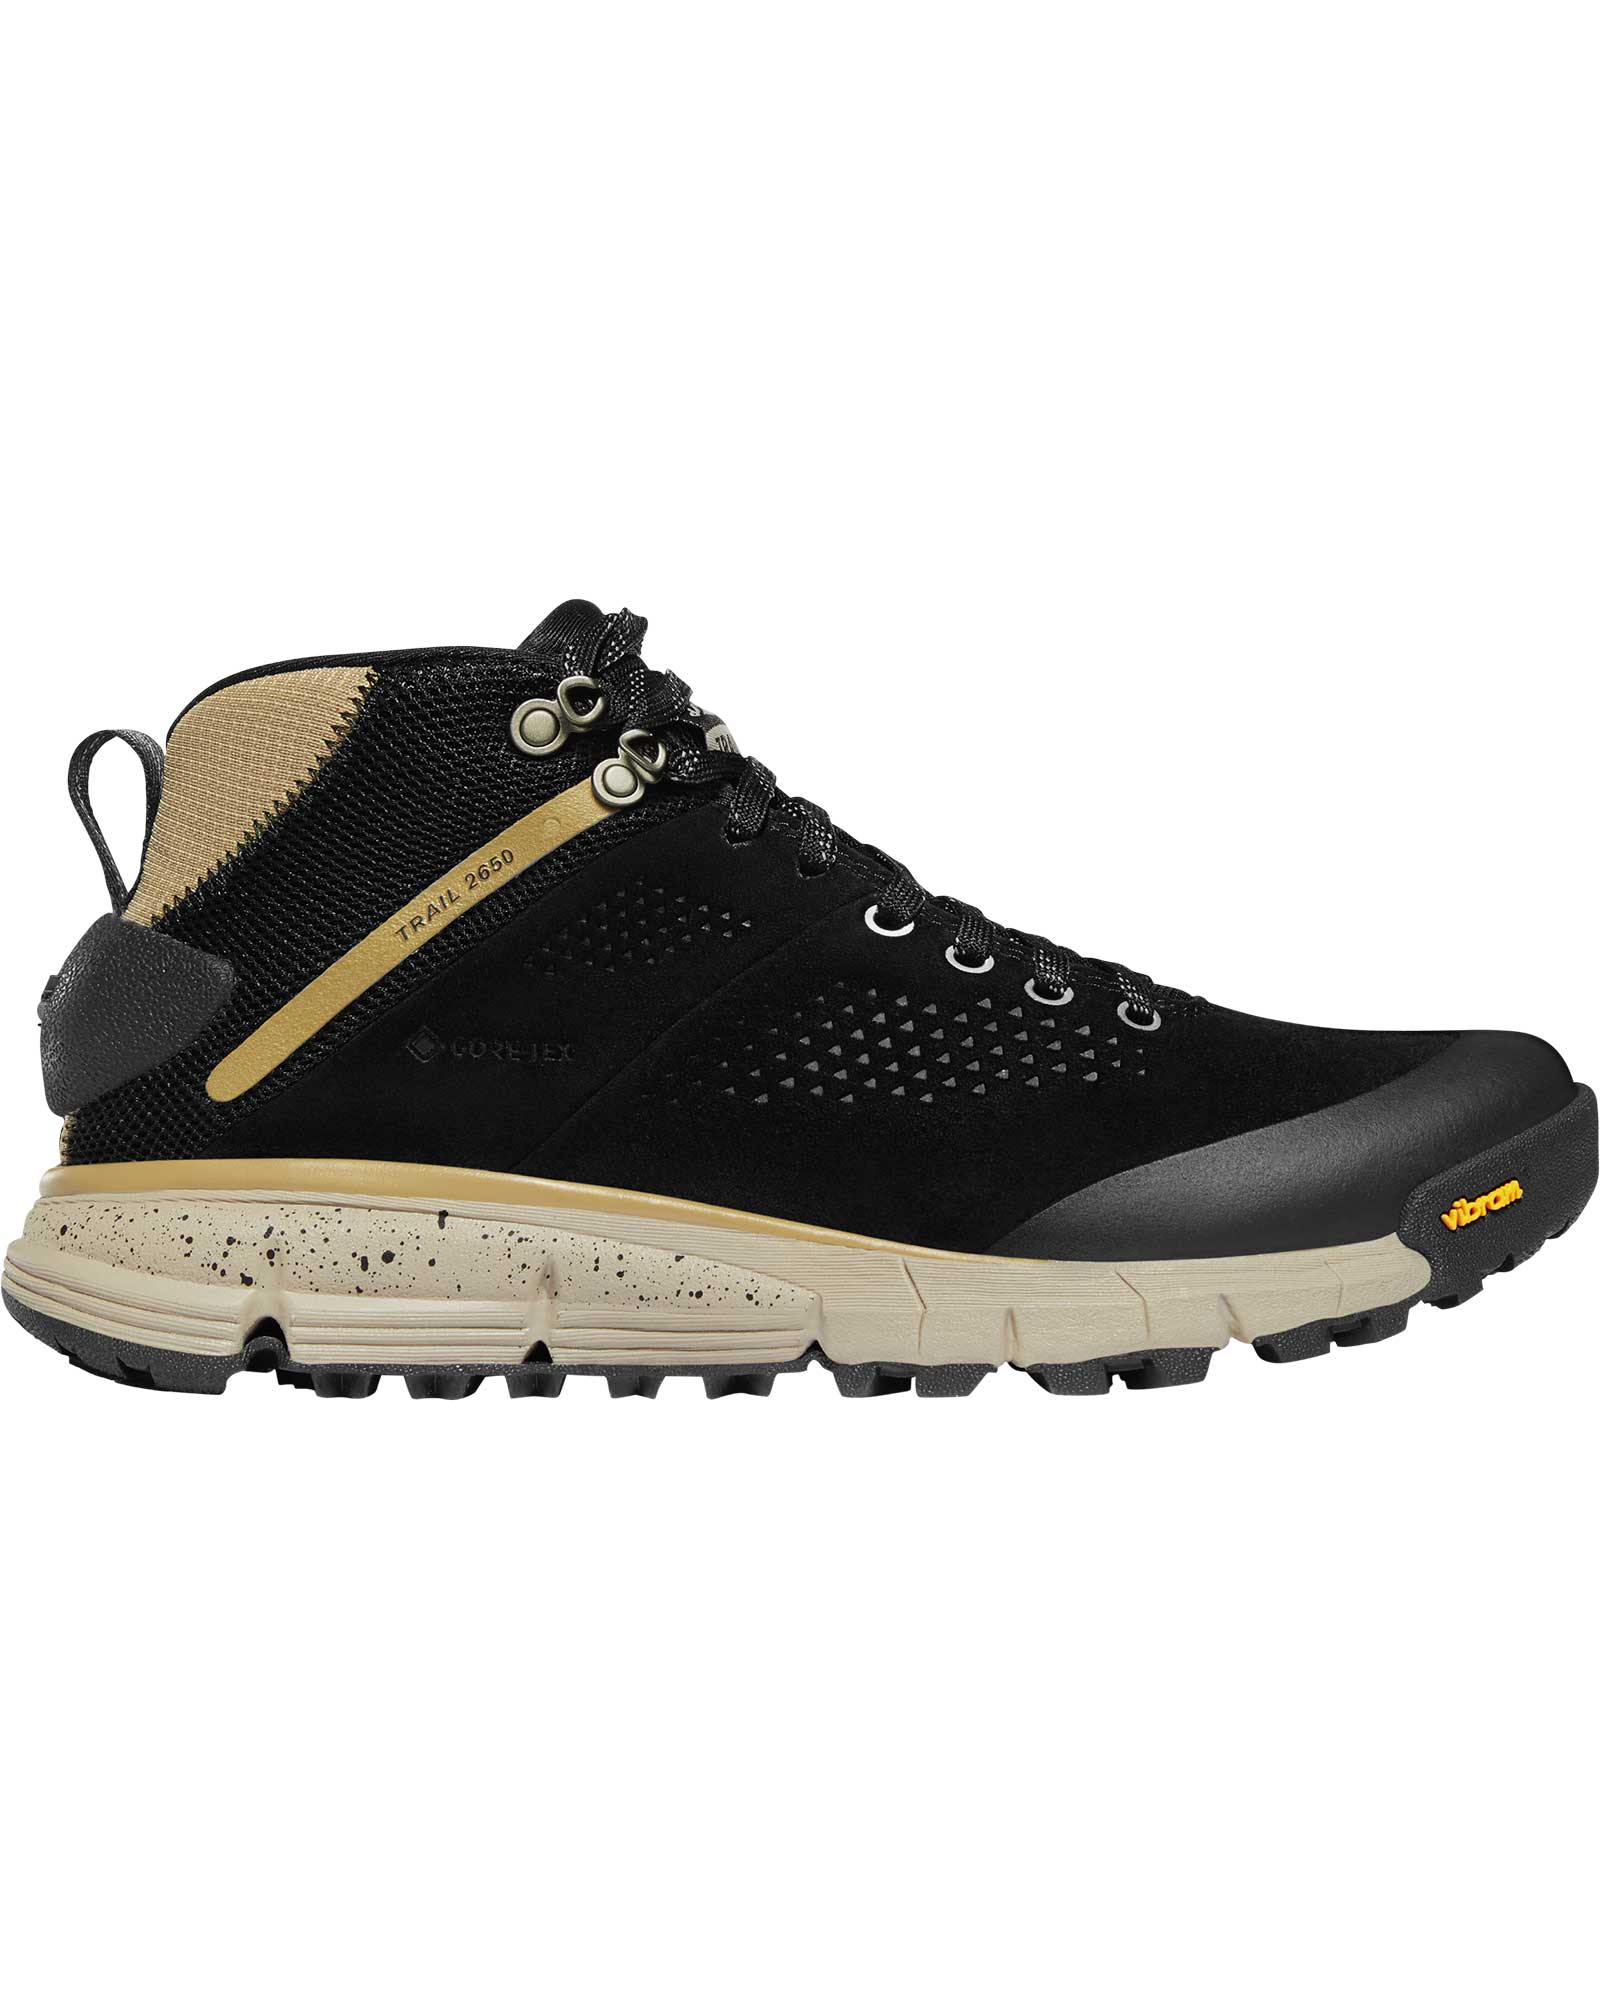 Danner Women’s Trail 2650 Mid GORE TEX Boots - Black/Khaki UK 7